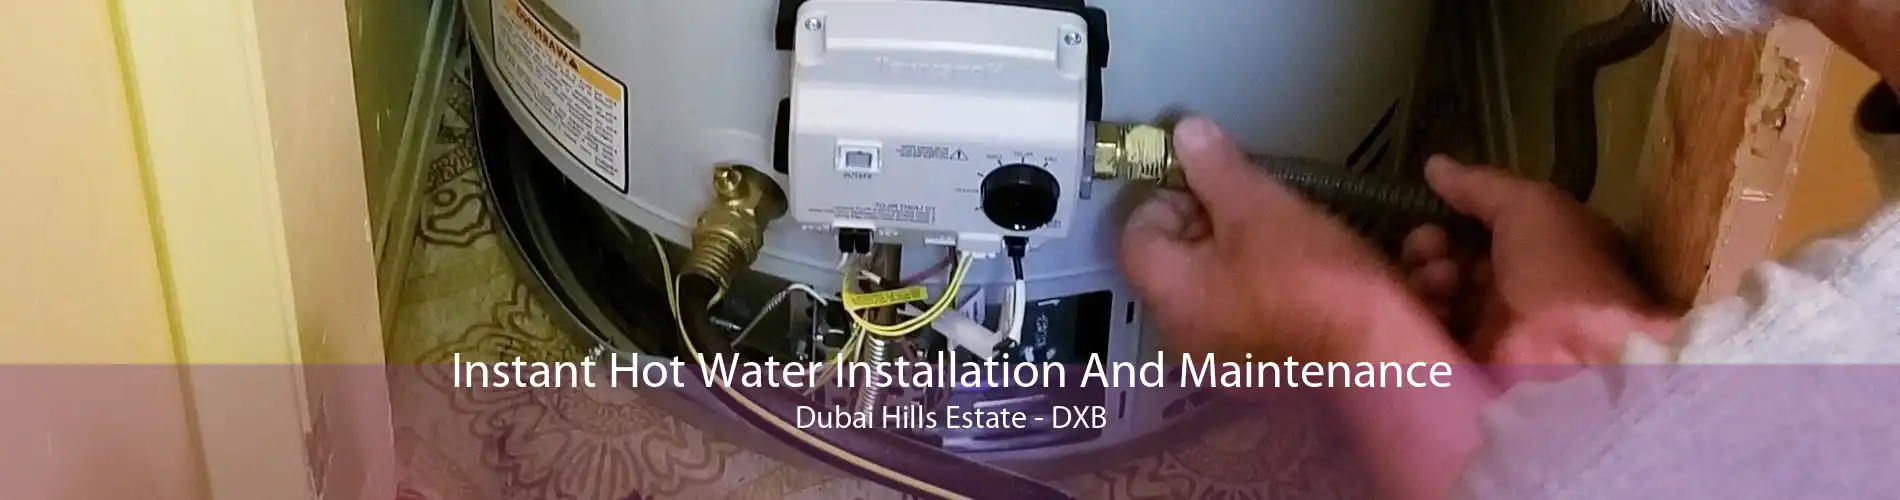 Instant Hot Water Installation And Maintenance Dubai Hills Estate - DXB